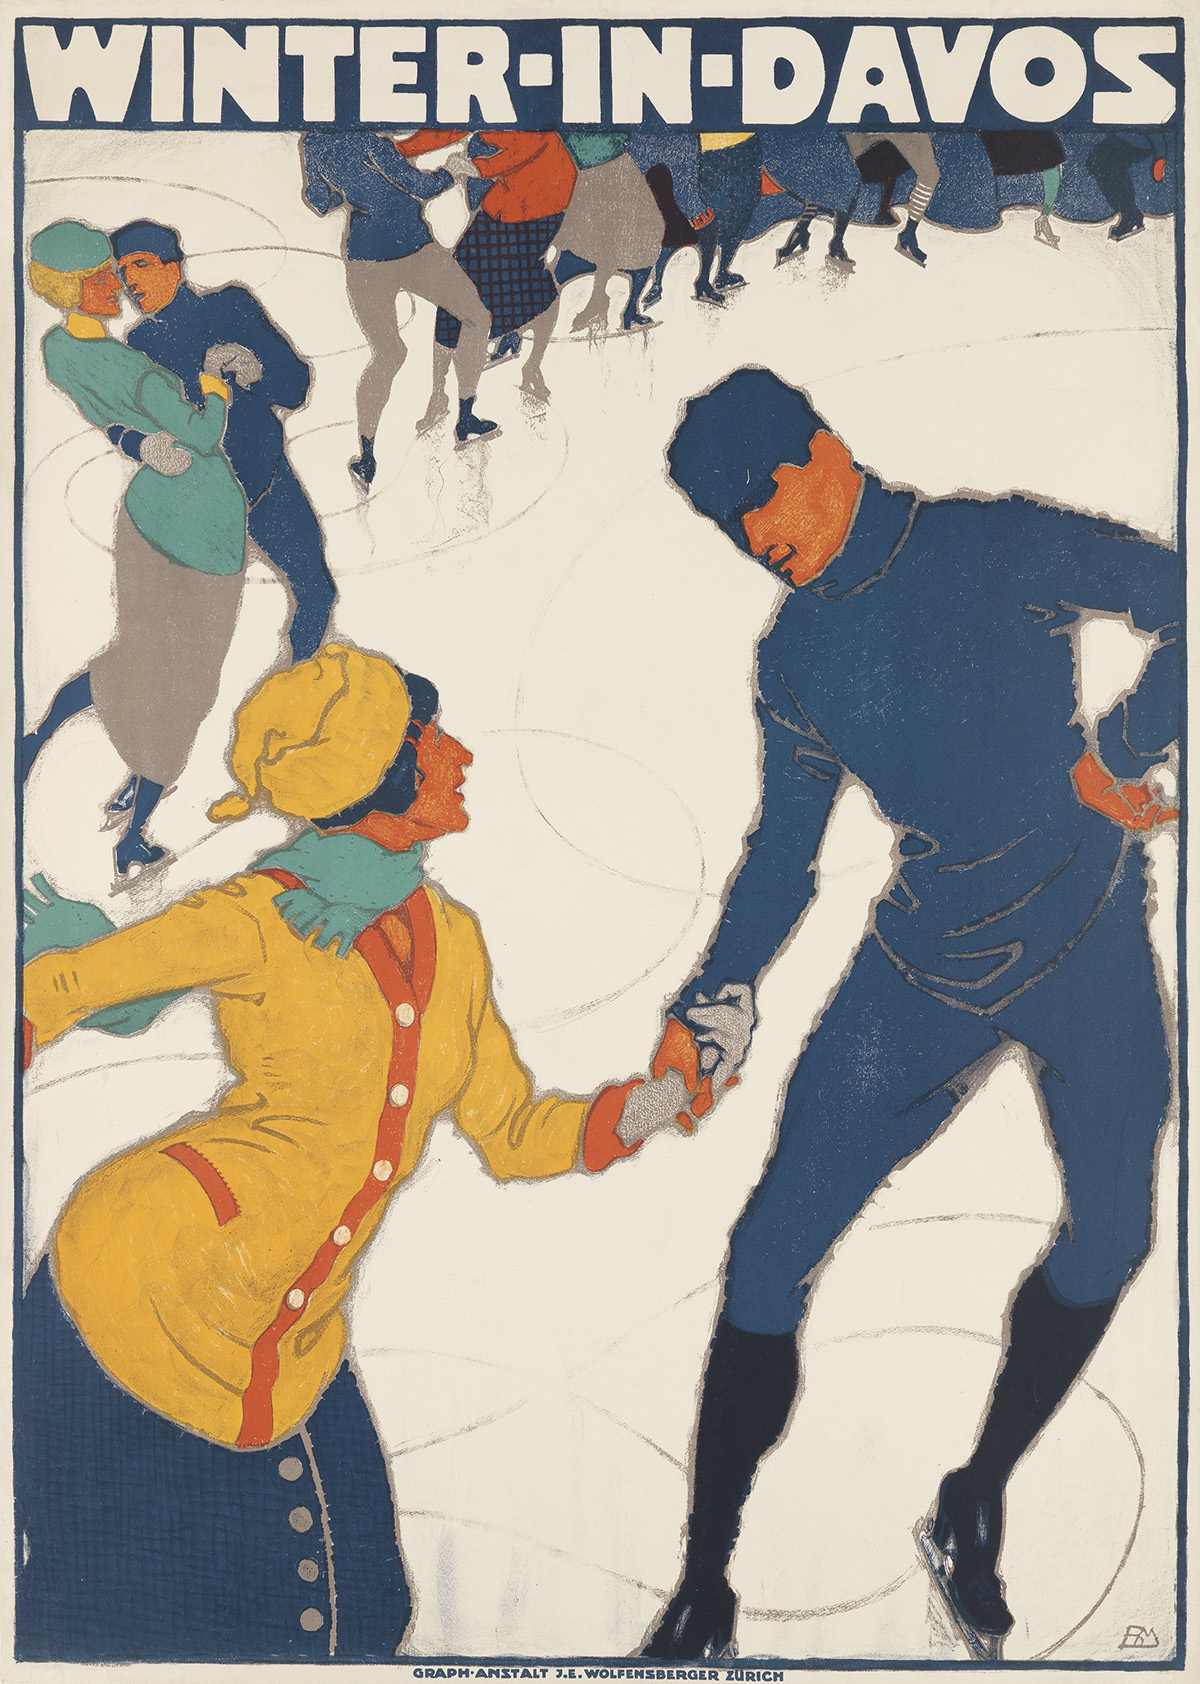 BURKHARD MANGOLD (1873-1950). WINTER - IN - DAVOS. 1914. 50x35 inches, 127x90 cm. J.E. Wolfensberger, Zurich.